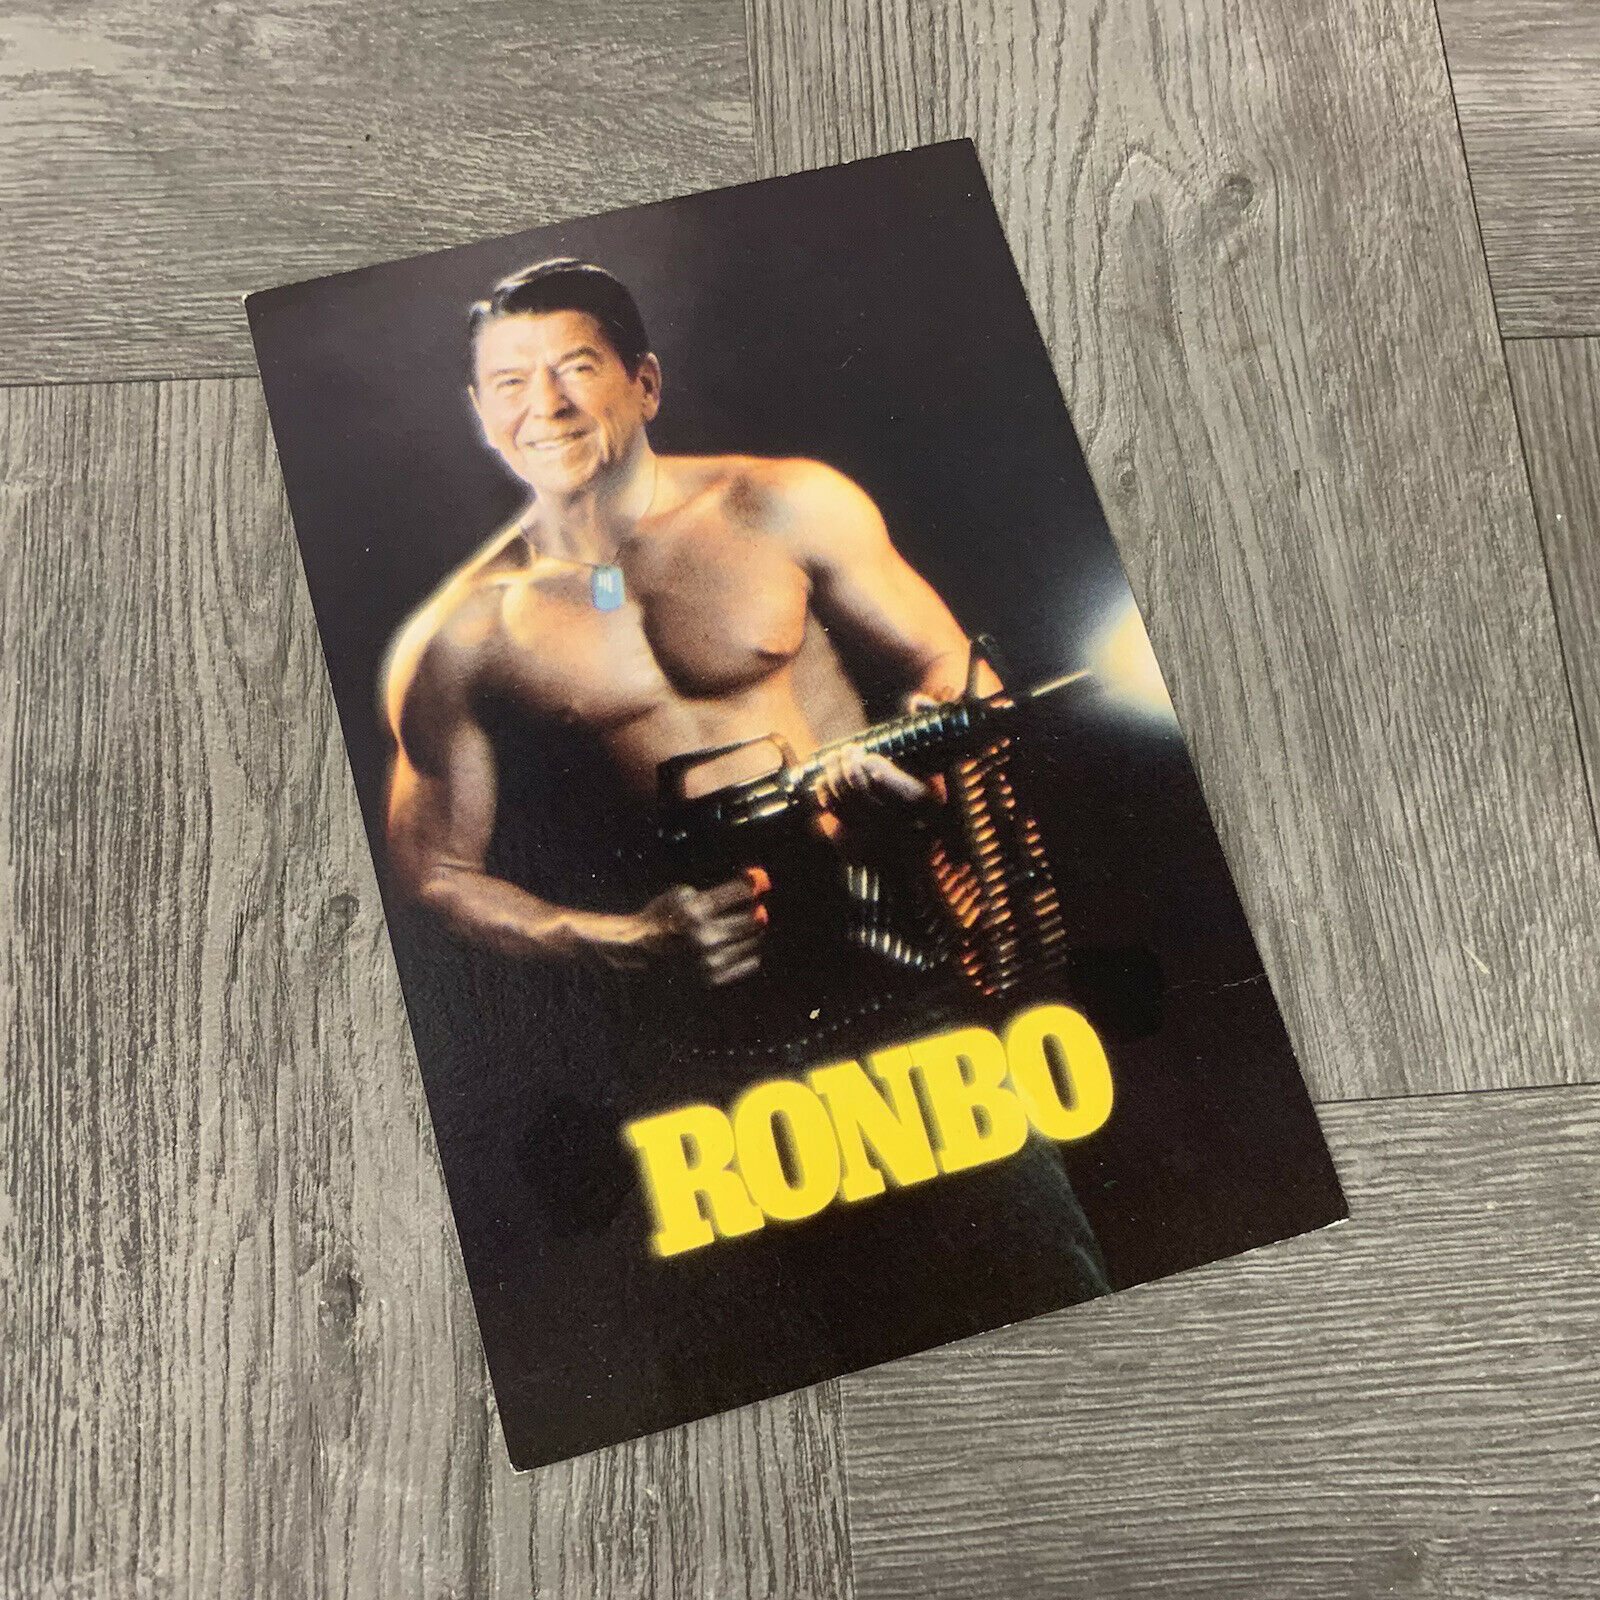 Ronbo President Ronald Reagan Rambo Humorous Vintage Postcard Politcal Advertise